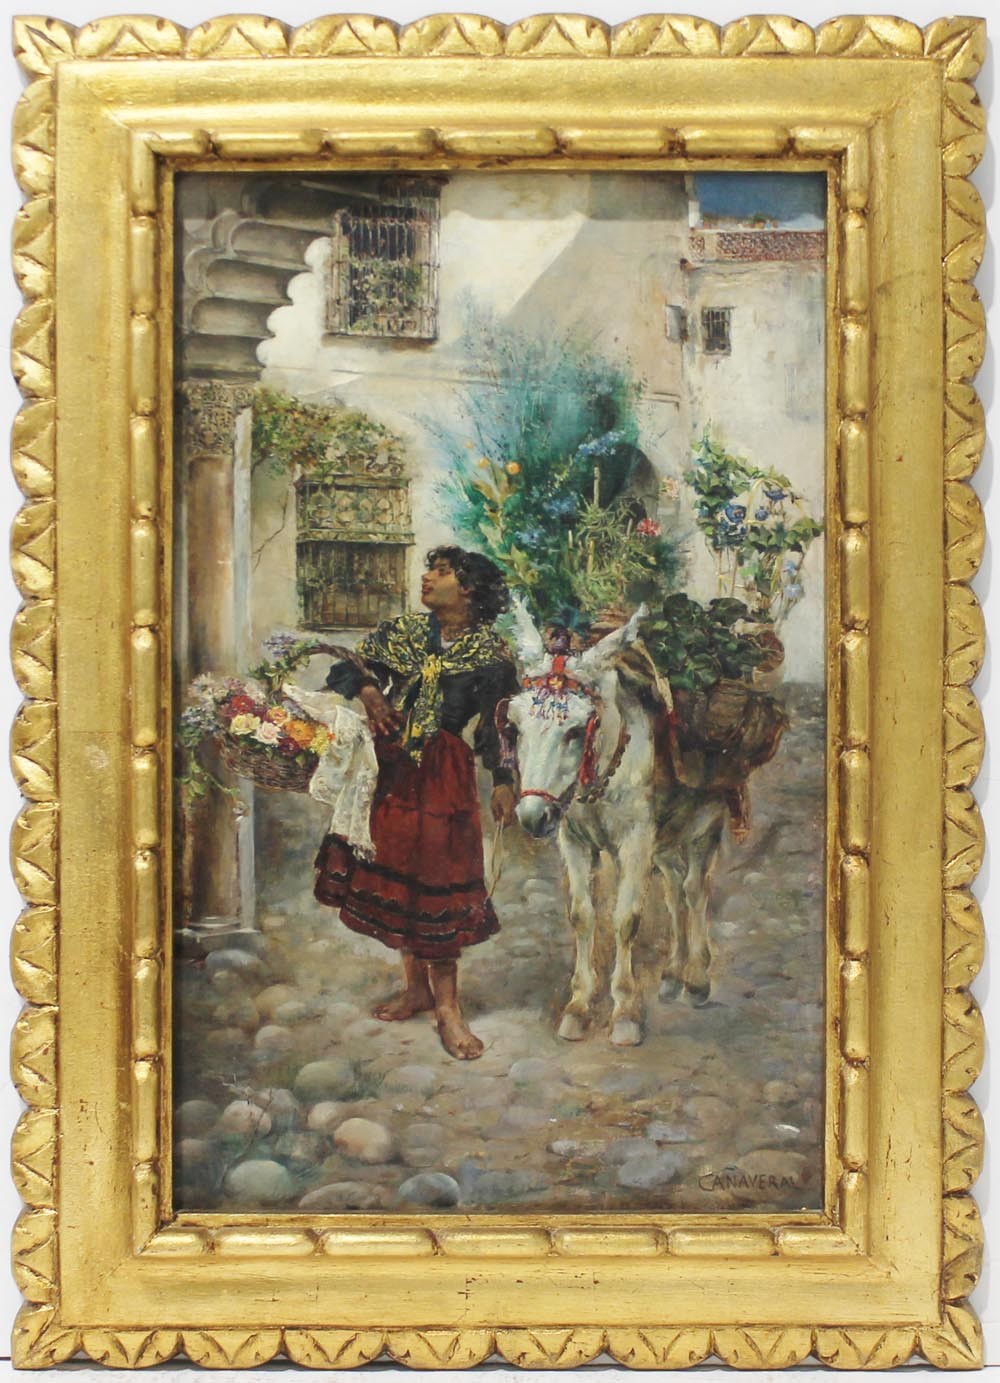 José Cañaveral y Pérez: Woman with donkey